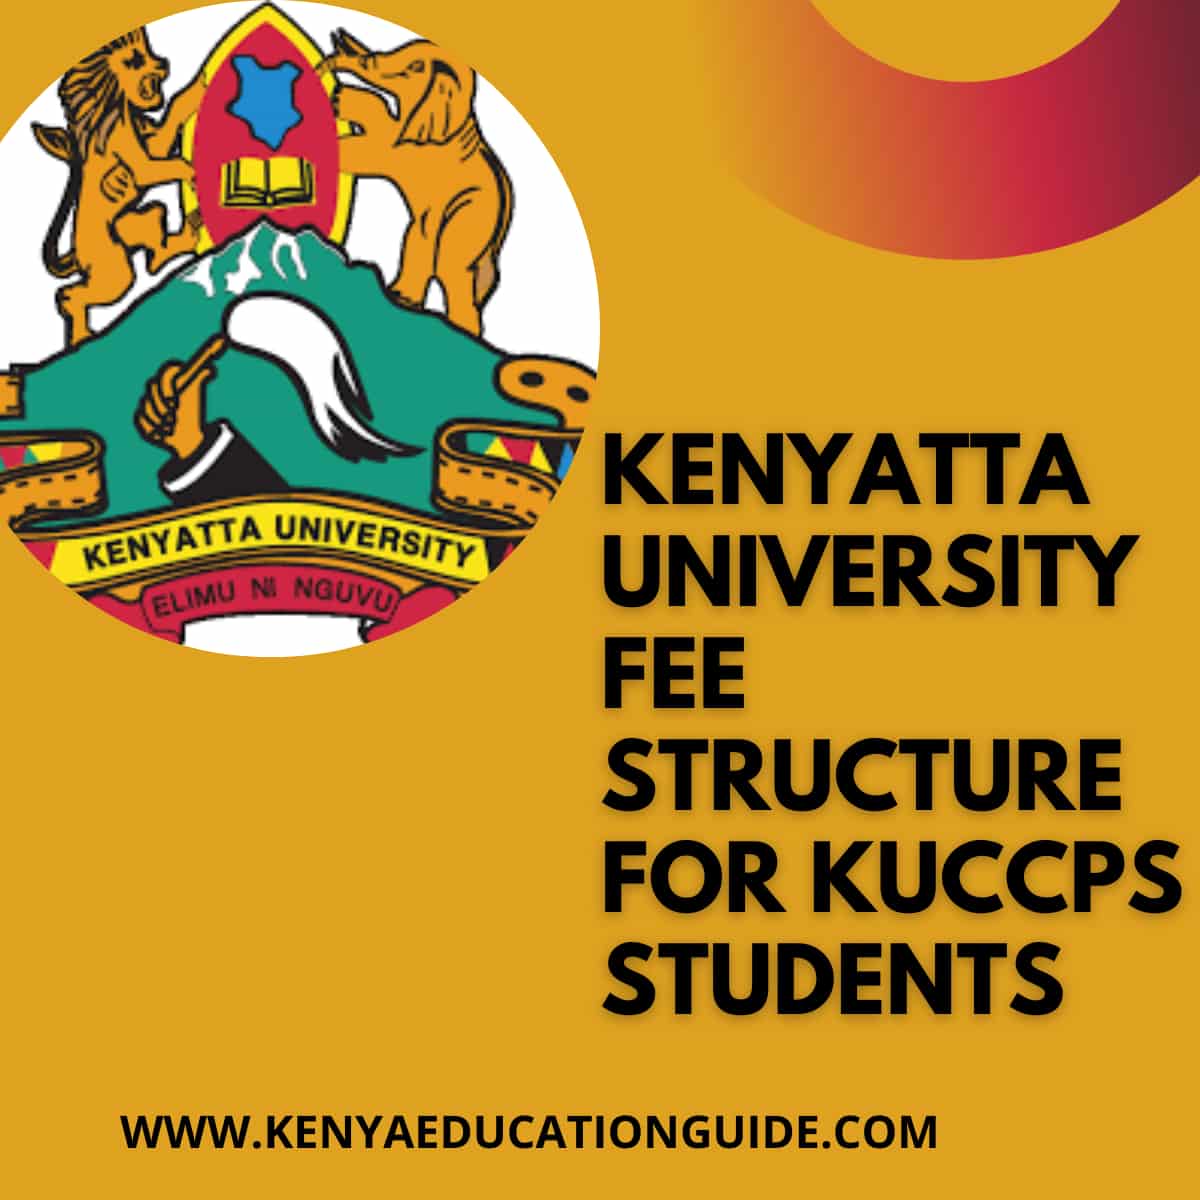 Kenyatta University Fee Structure for KUCCPS Students